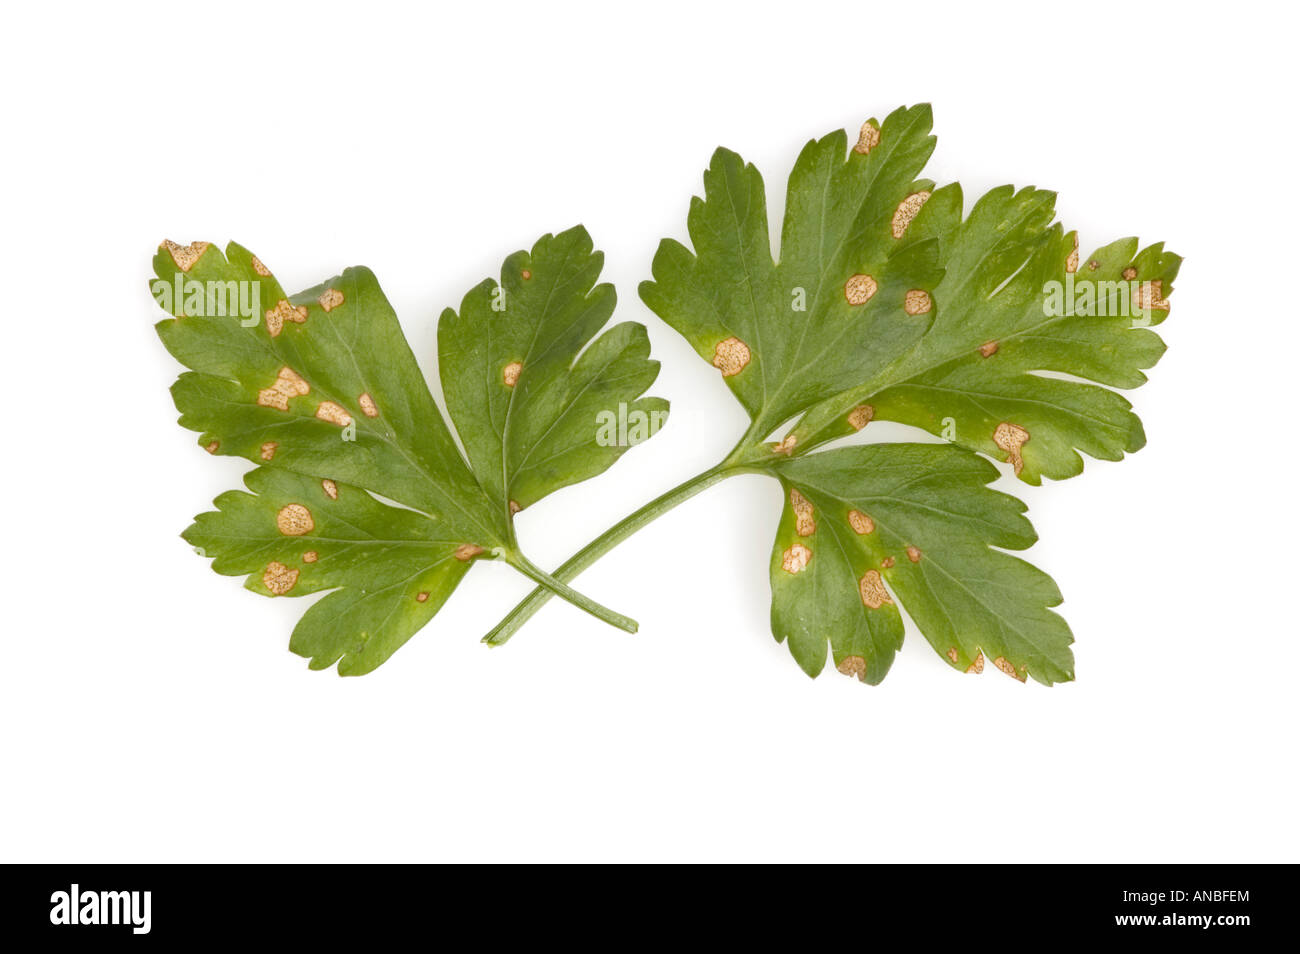 Septoria leaf spot on parsley Stock Photo